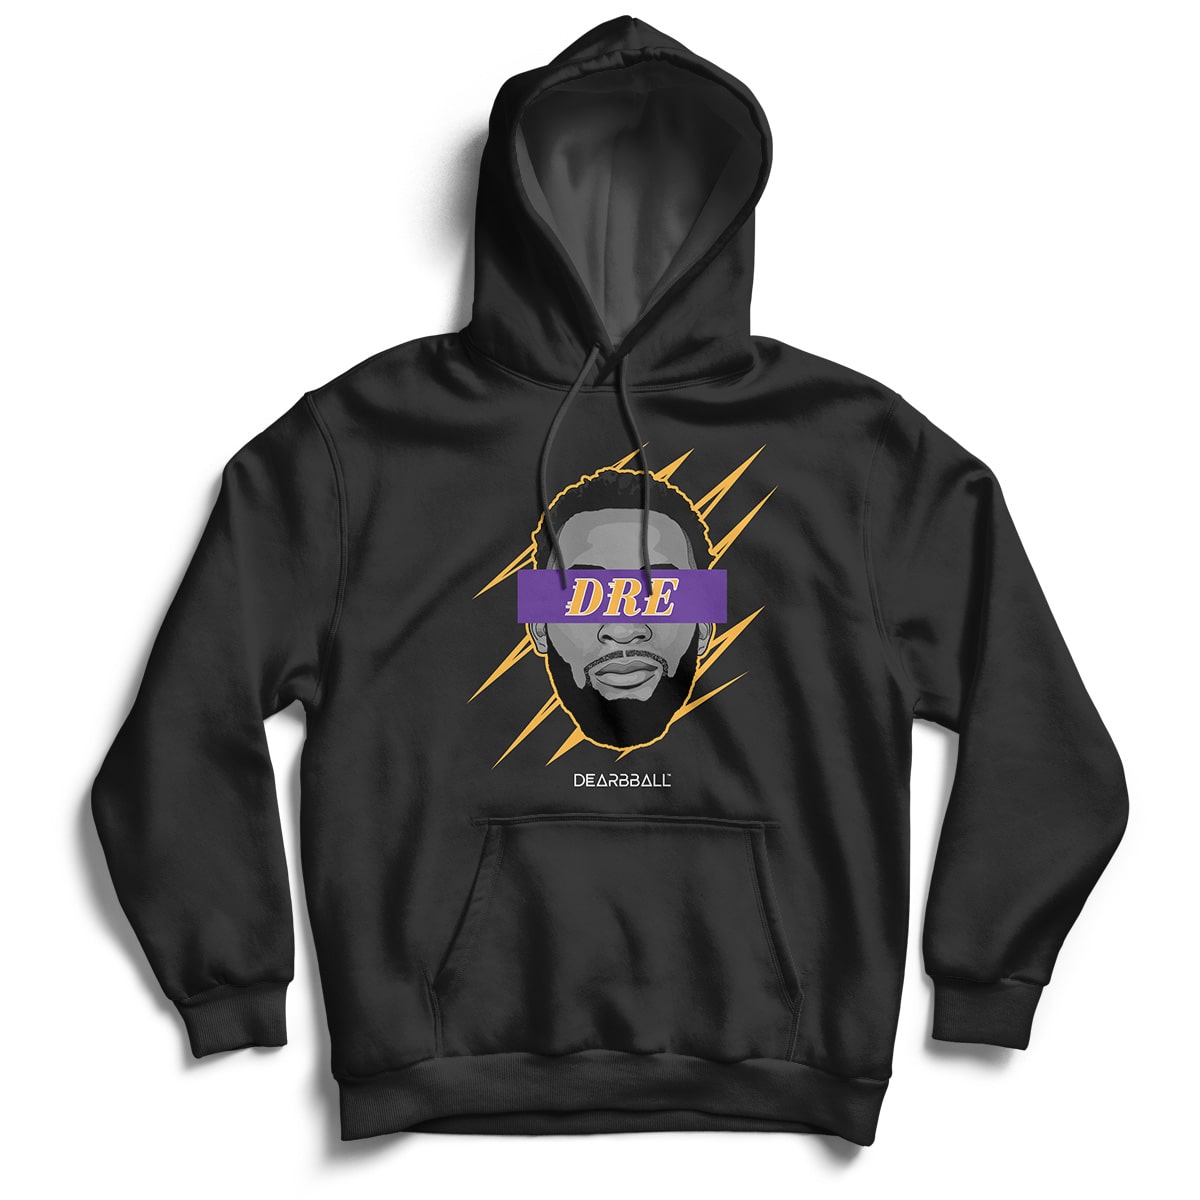 Andre Drummond Hoodie - Alternative DRE Los Angeles Lakers Basketball Dearbball black